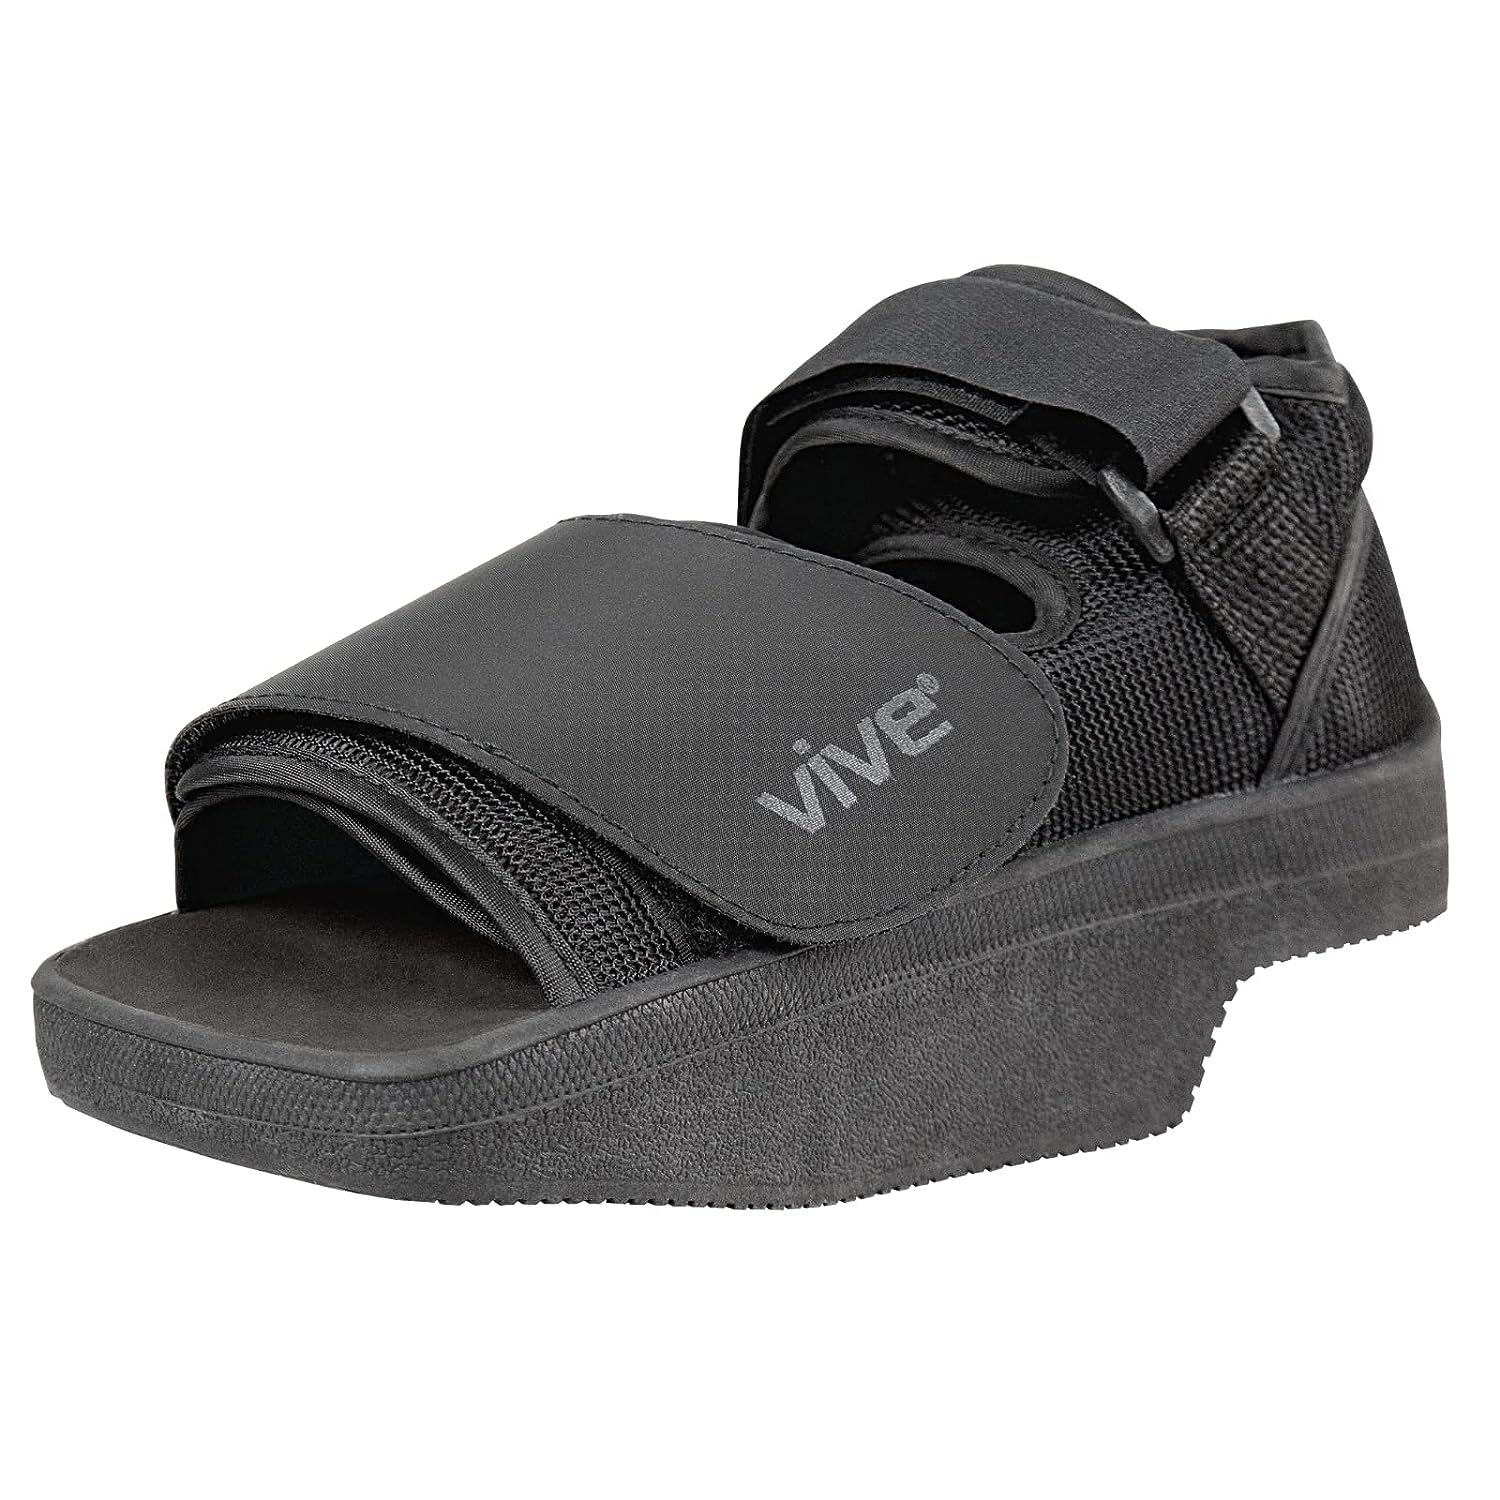 Vive Wedge Post-Op Shoe - Offloading Boot for Heel or [...]